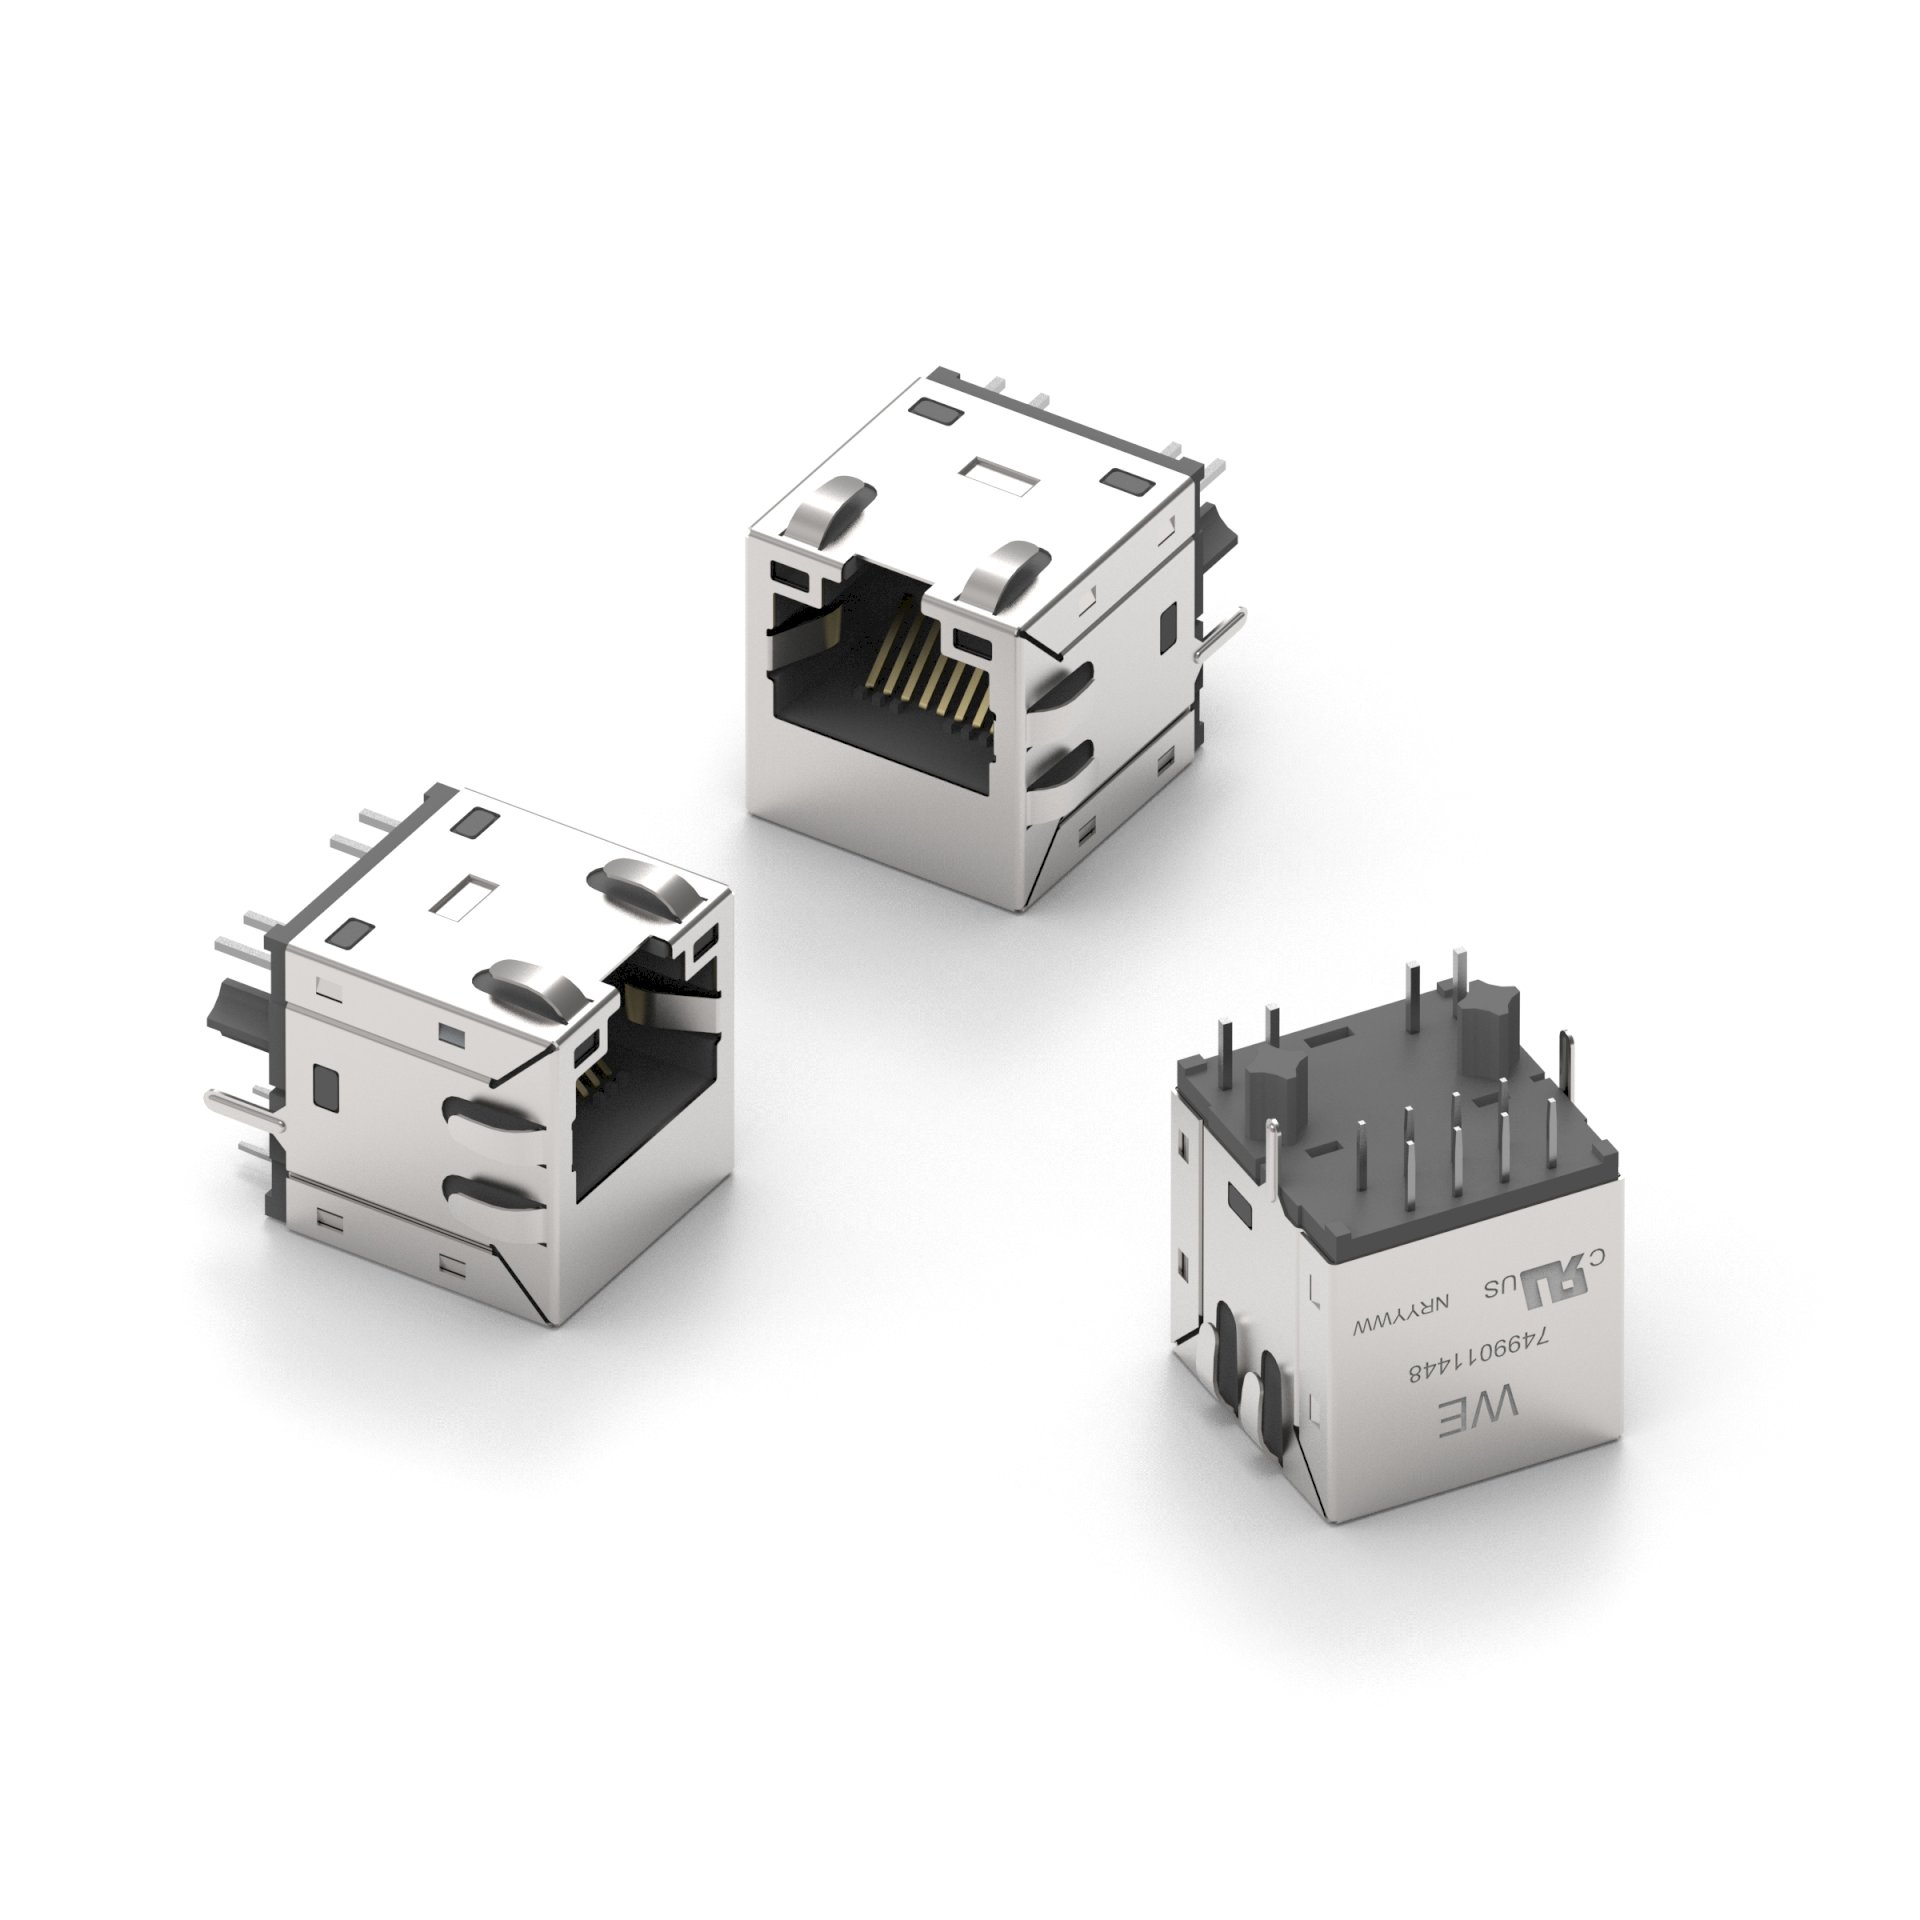 Würth Elektronik presents new RJ45-10G-LAN transformers